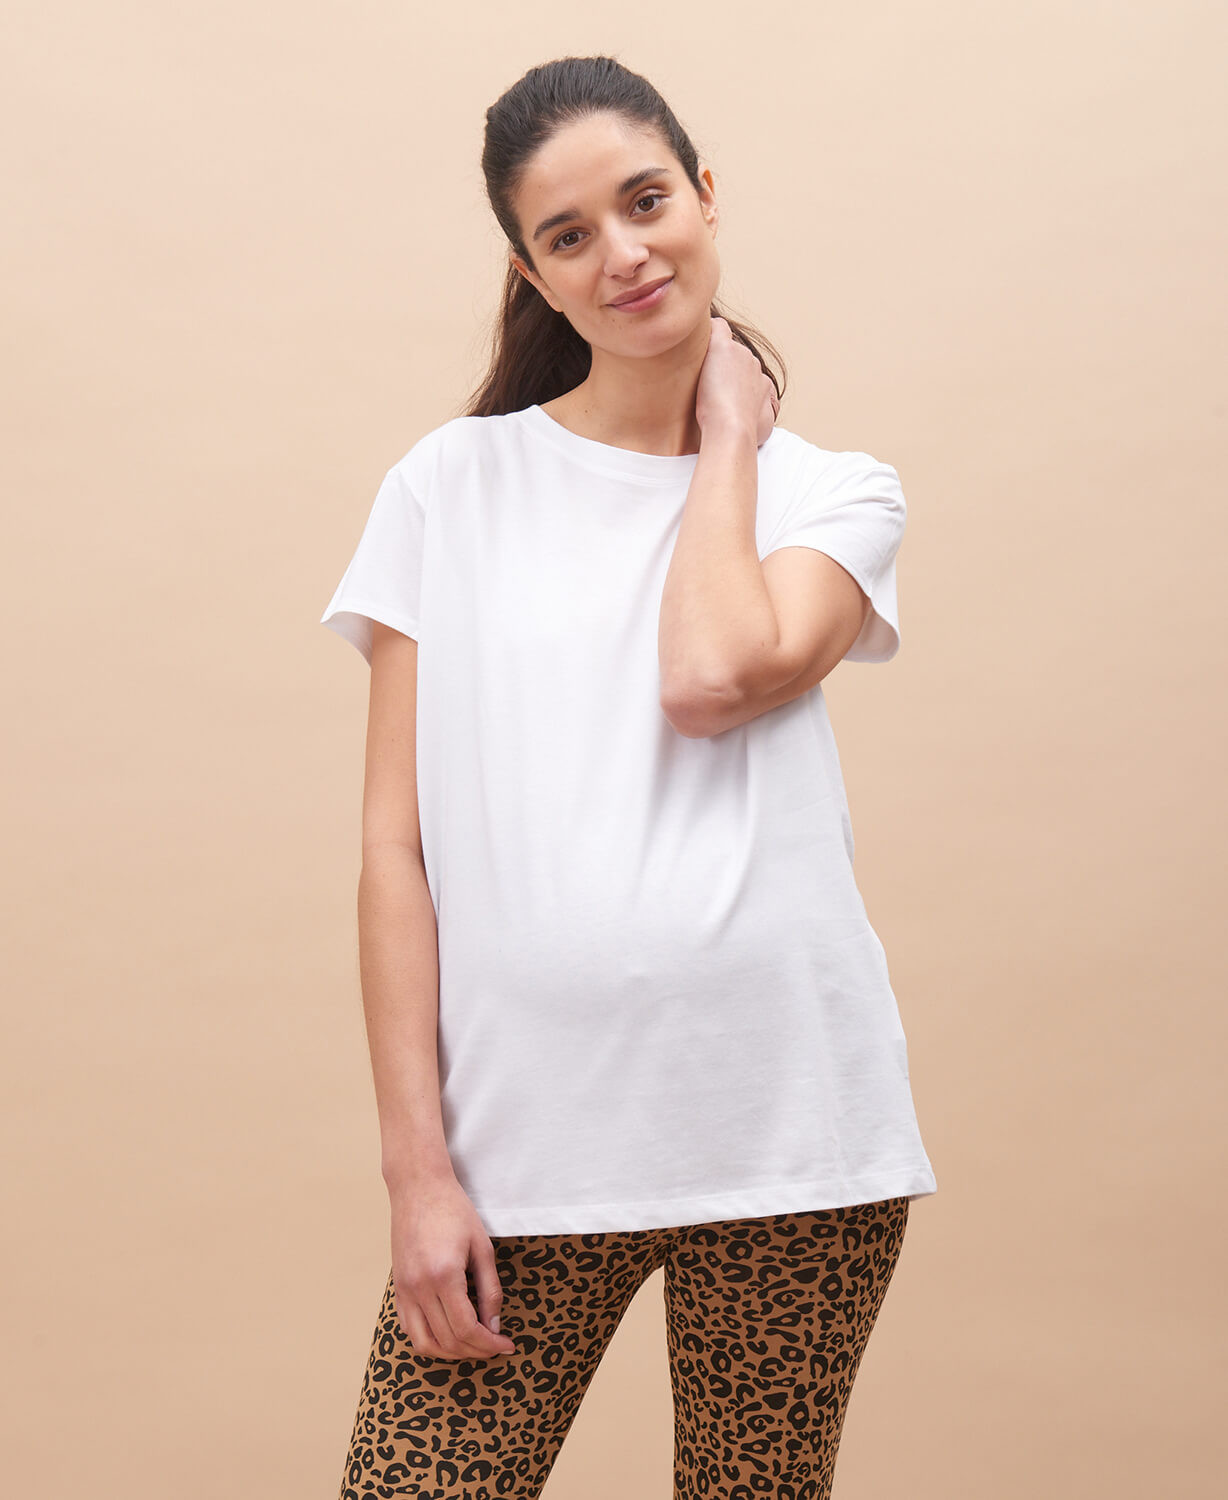 Maternity Top, Organic, Cotton T-shirt